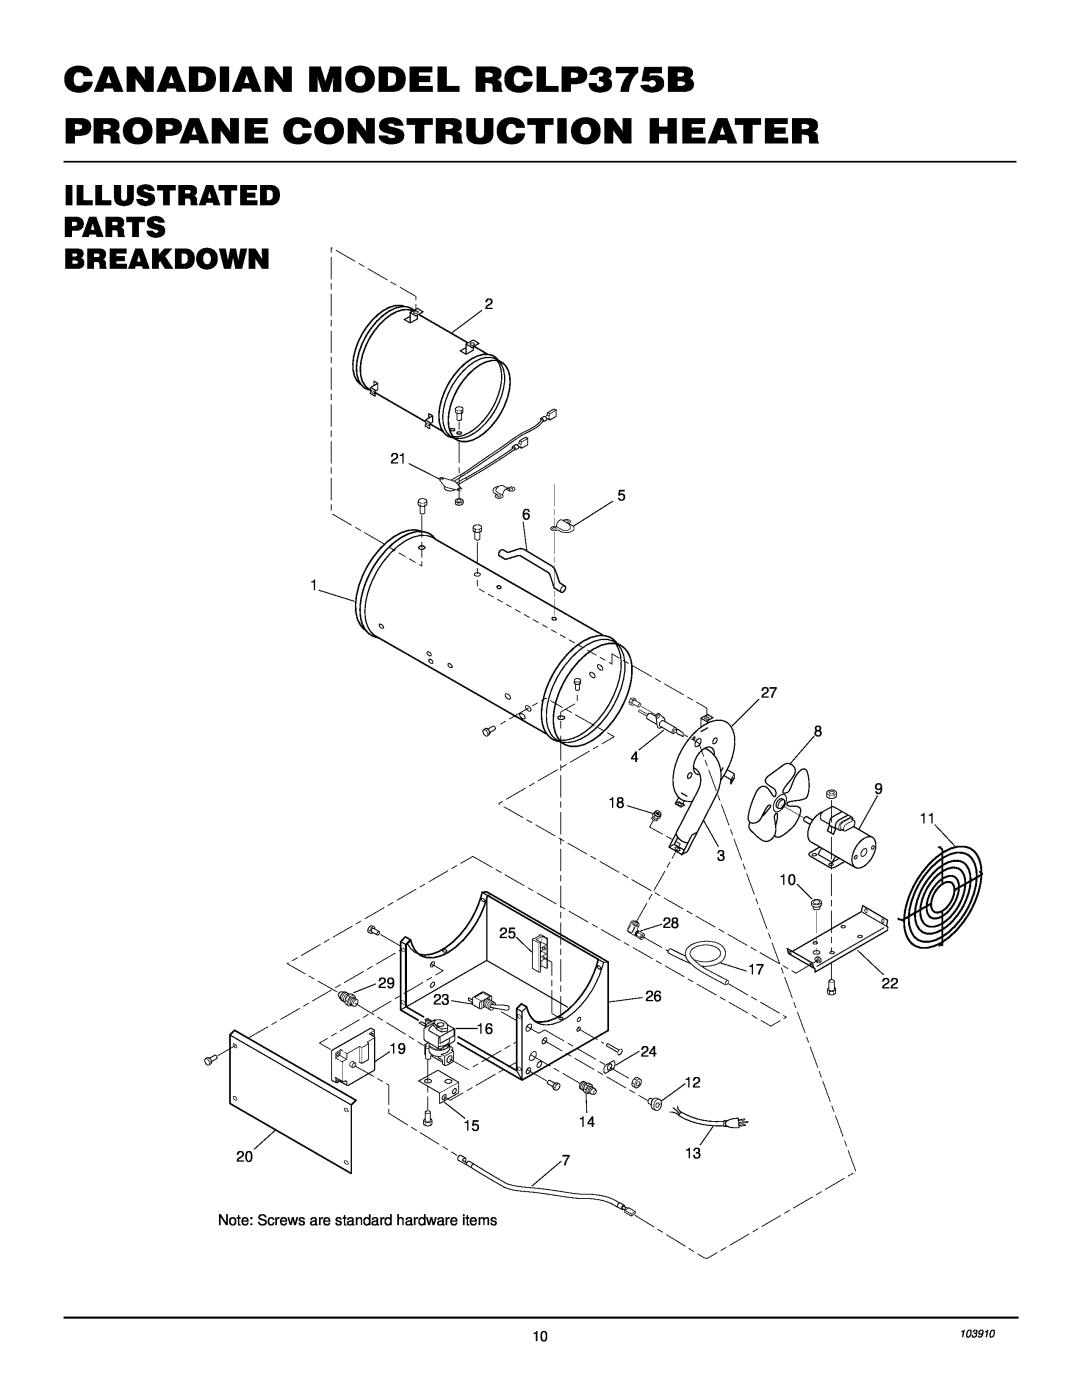 Desa owner manual Illustrated Parts Breakdown, CANADIAN MODEL RCLP375B, Propane Construction Heater 